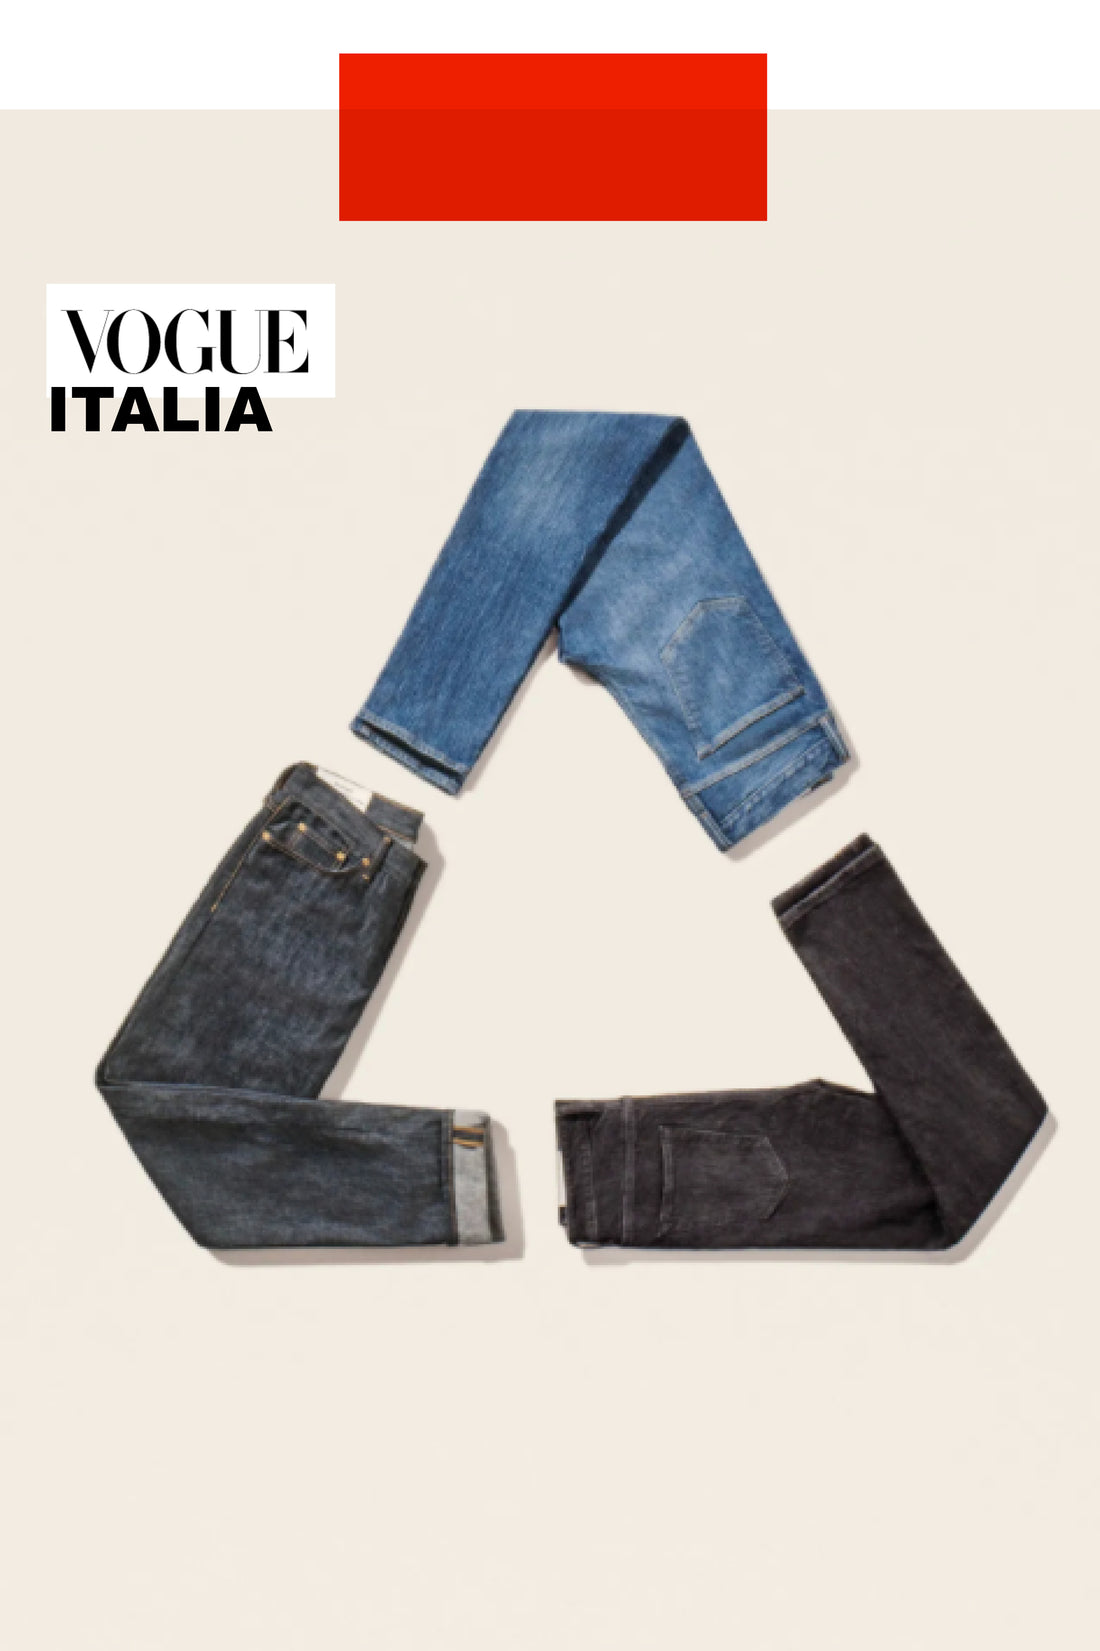 VOGUE ITALIA - The Jeans Redesign.